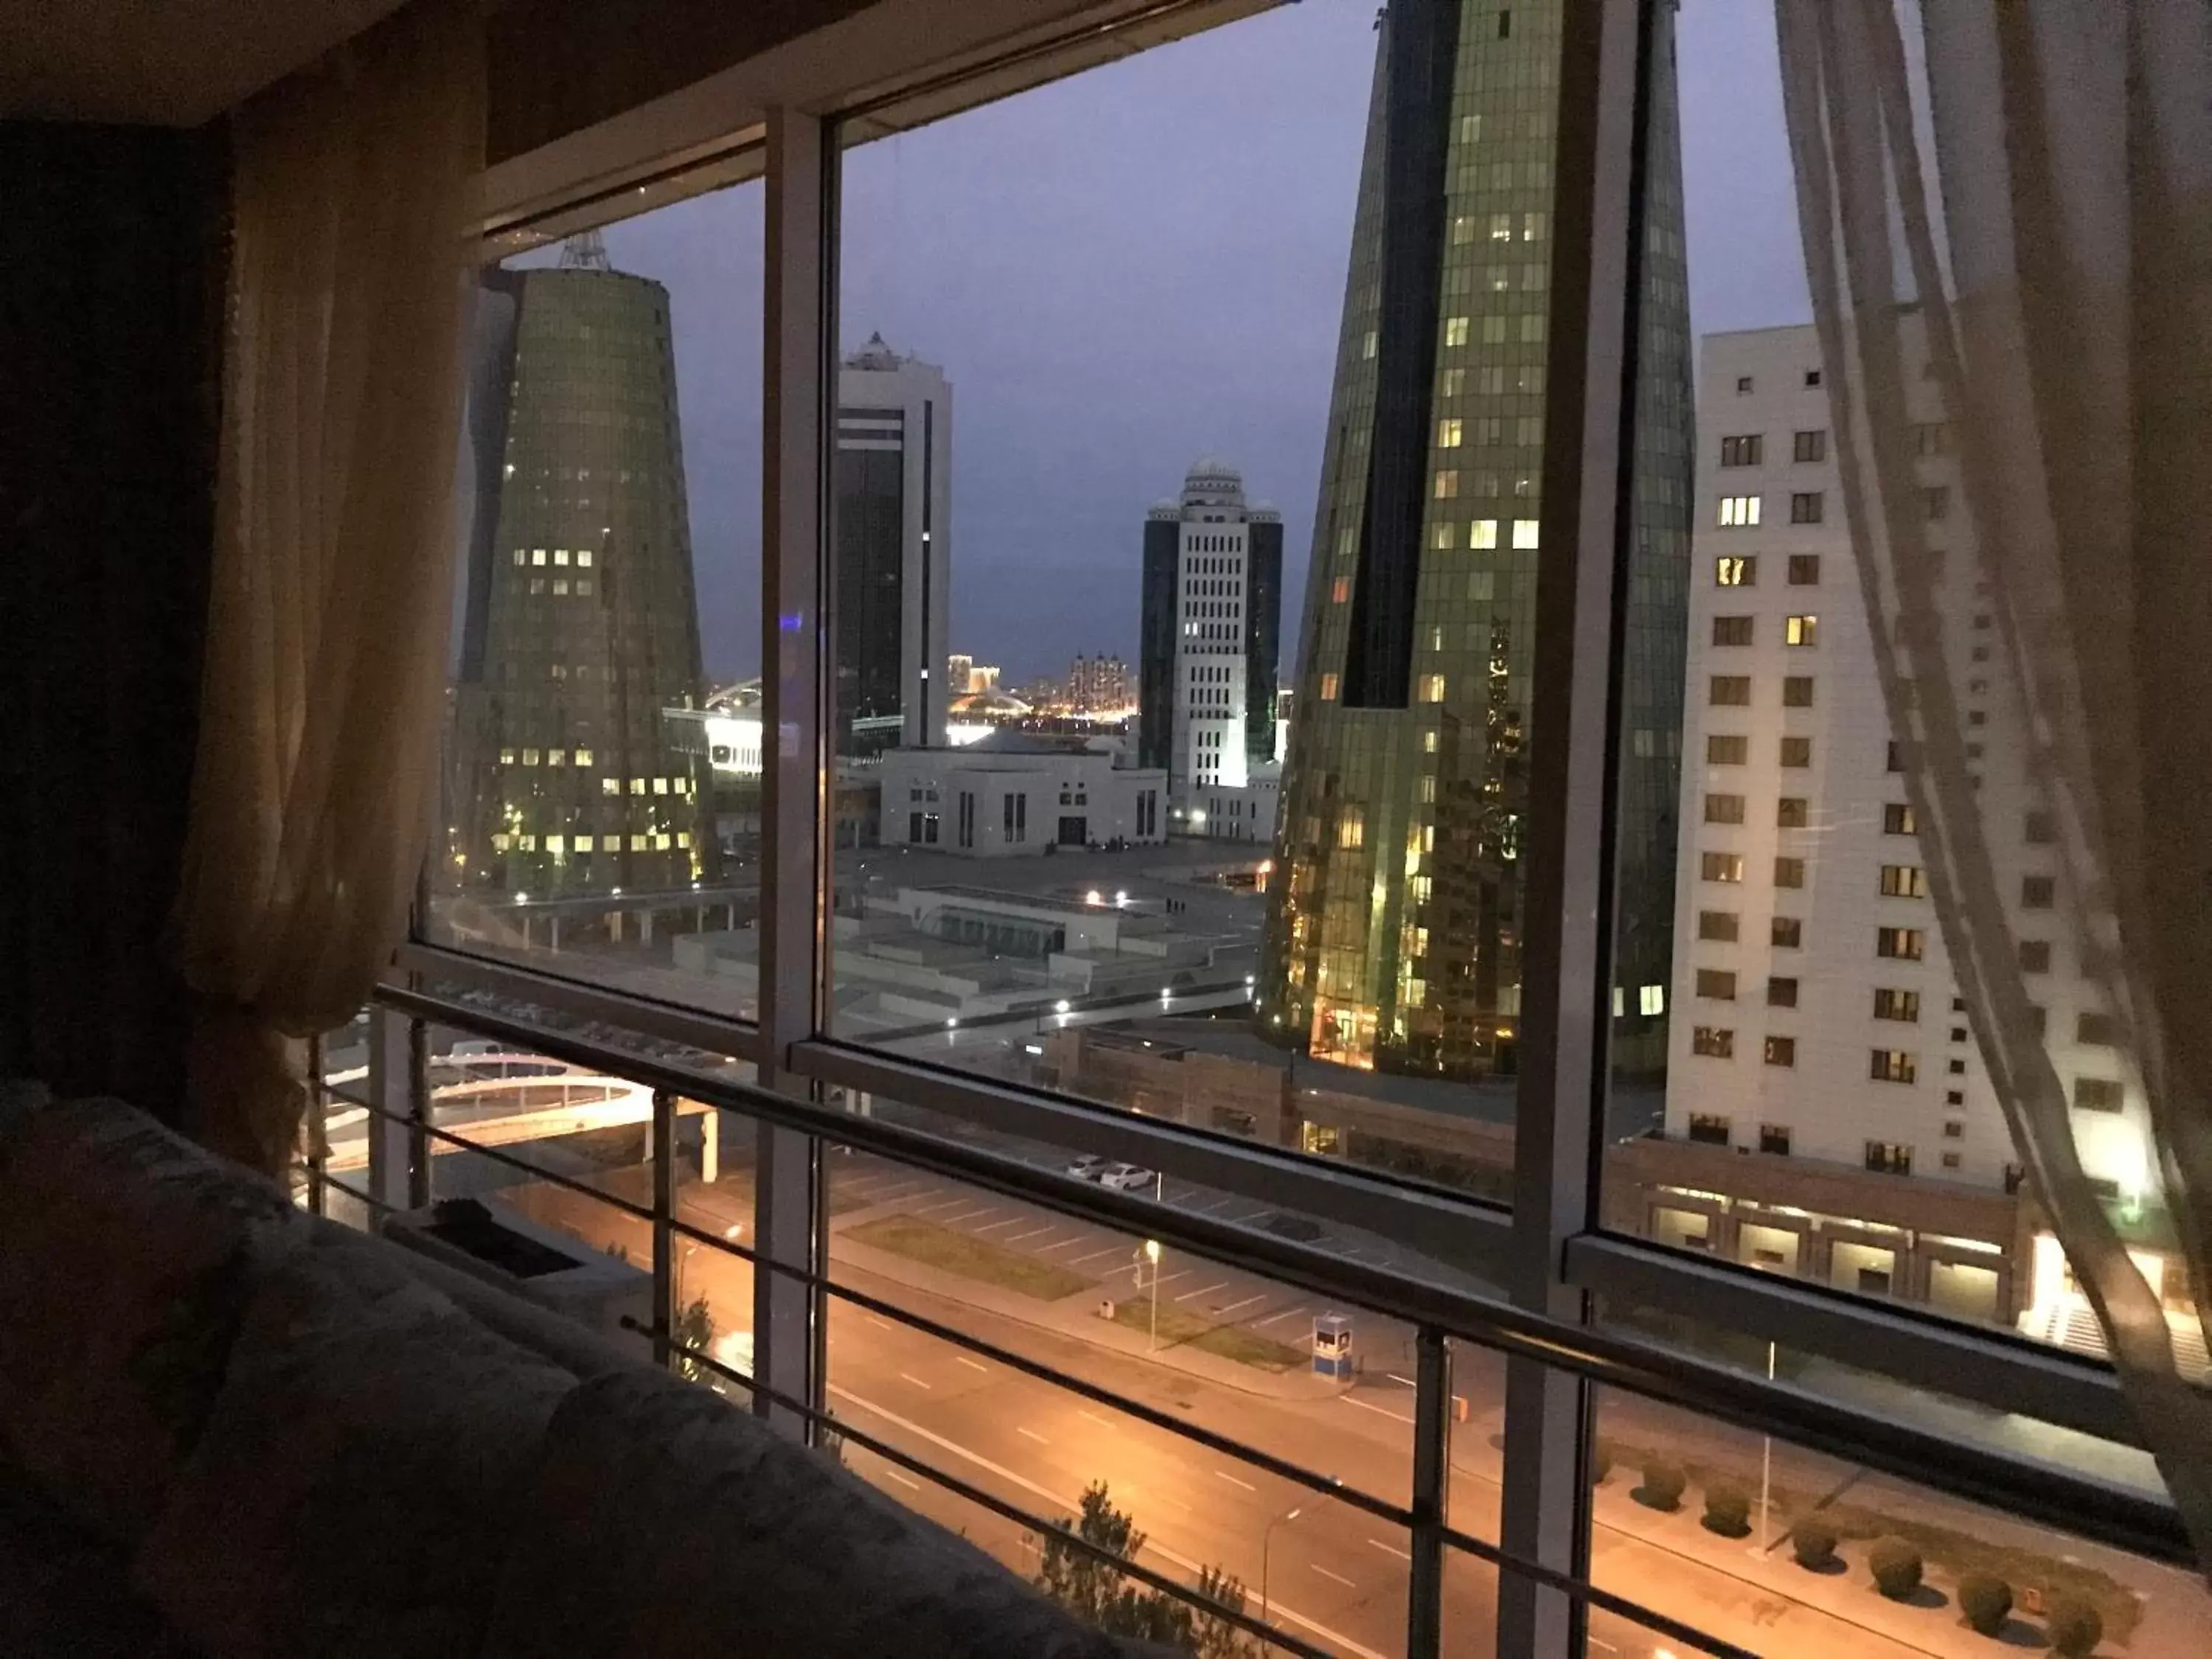 Night in Best Western Plus Astana Hotel